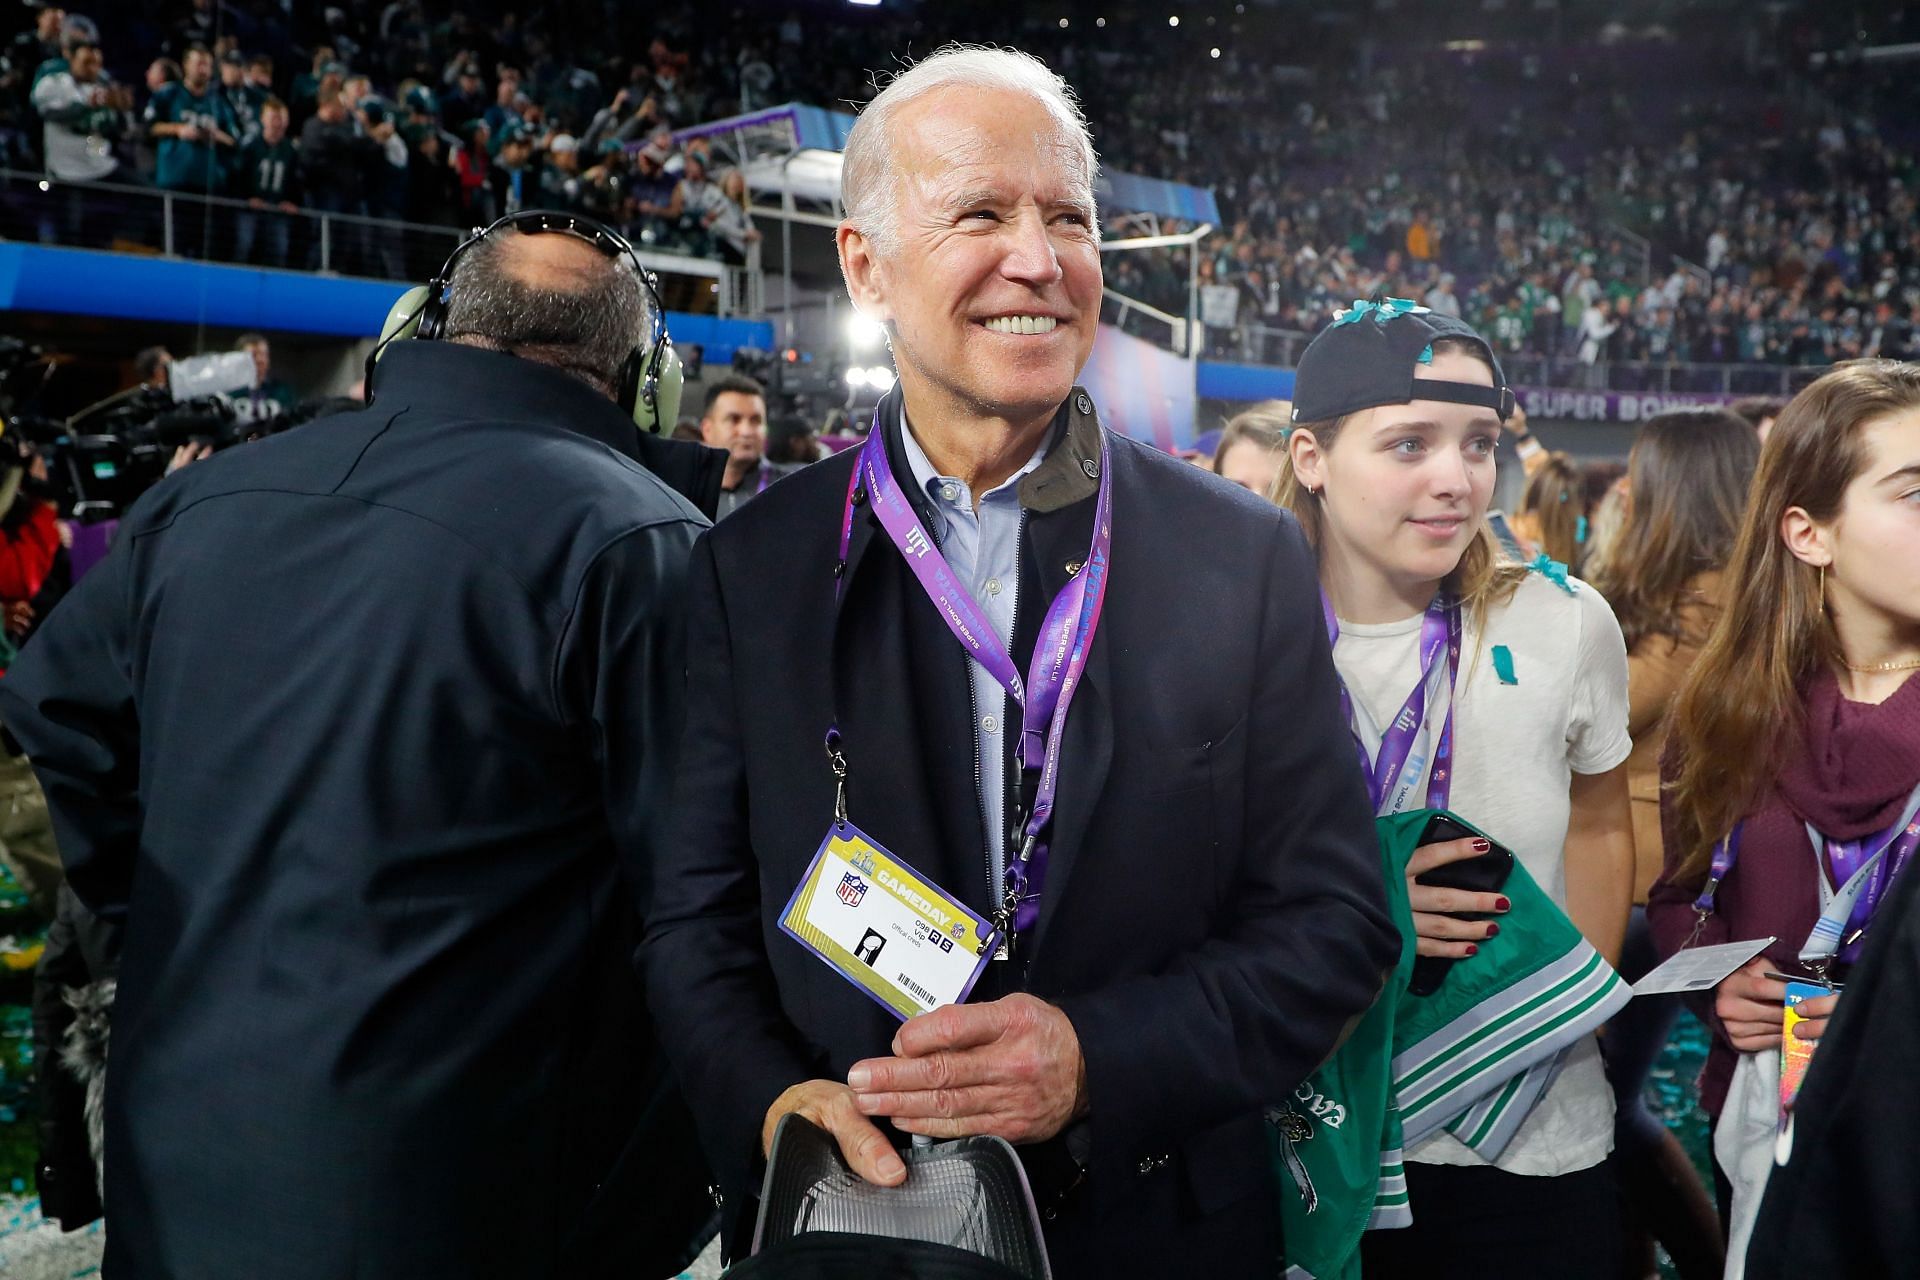 US president Joe Biden at Super Bowl LII